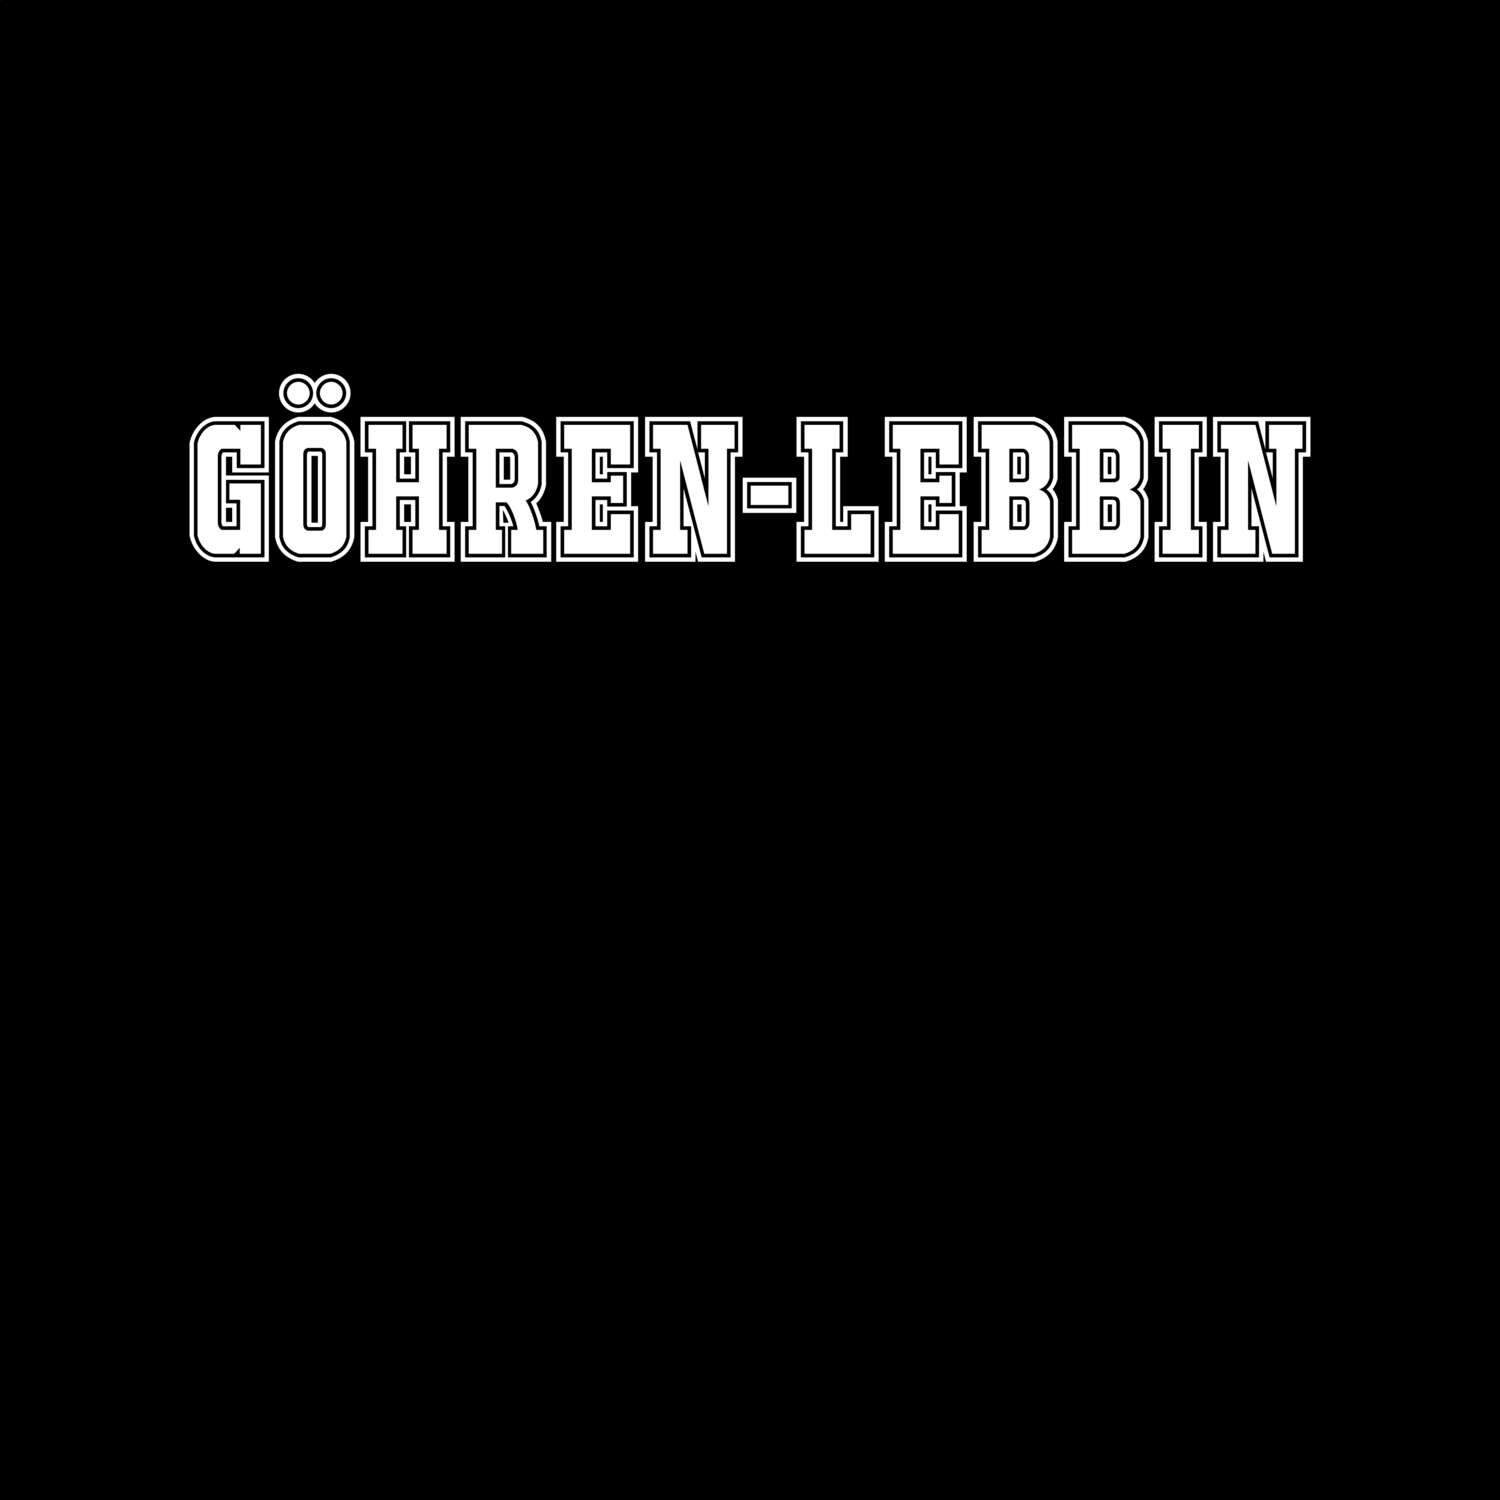 Göhren-Lebbin T-Shirt »Classic«